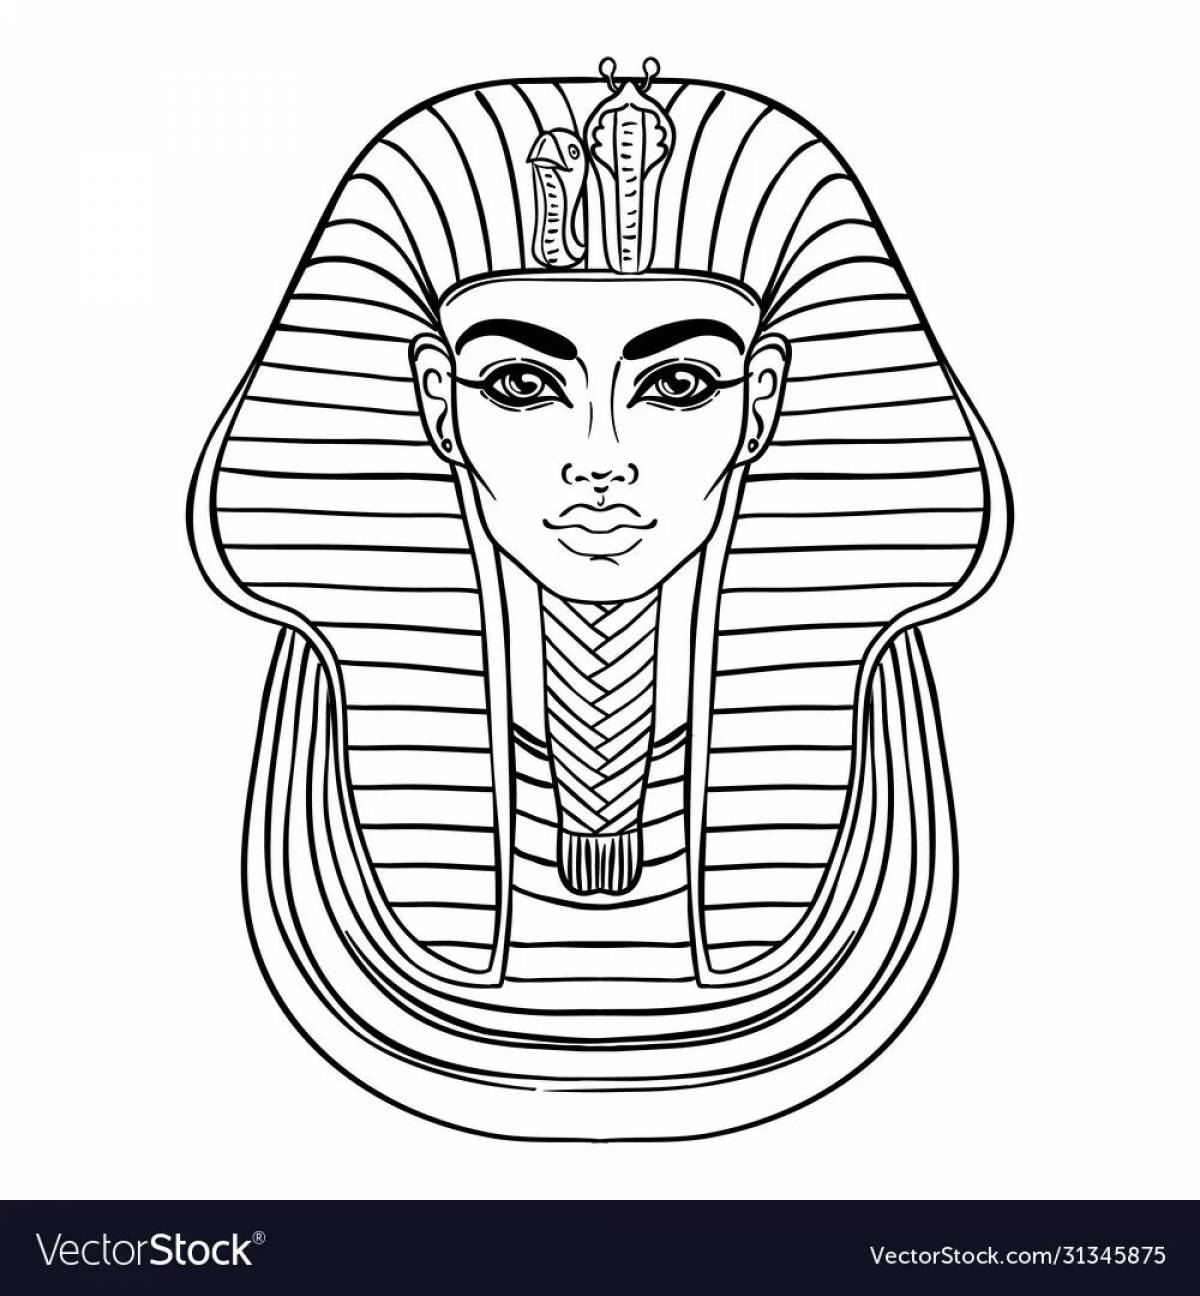 Mask of Pharaoh Tutankhamun from class 5 #10